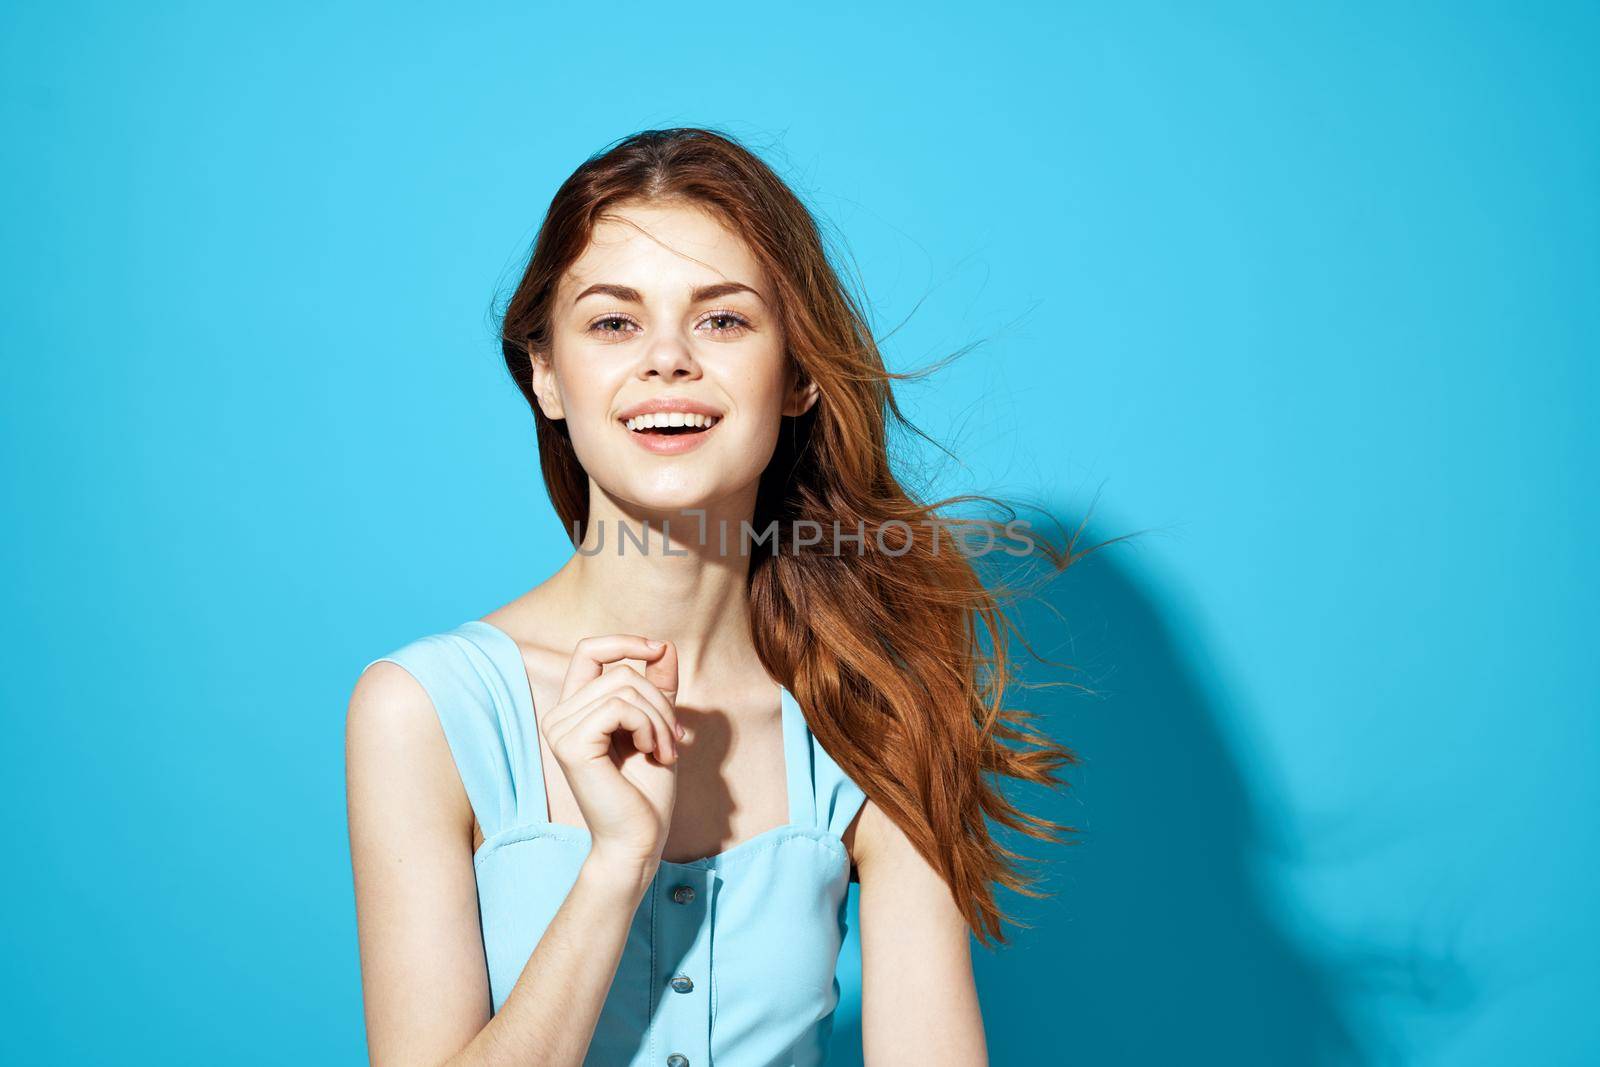 beautiful woman in a blue dress posing Studio fun model. High quality photo